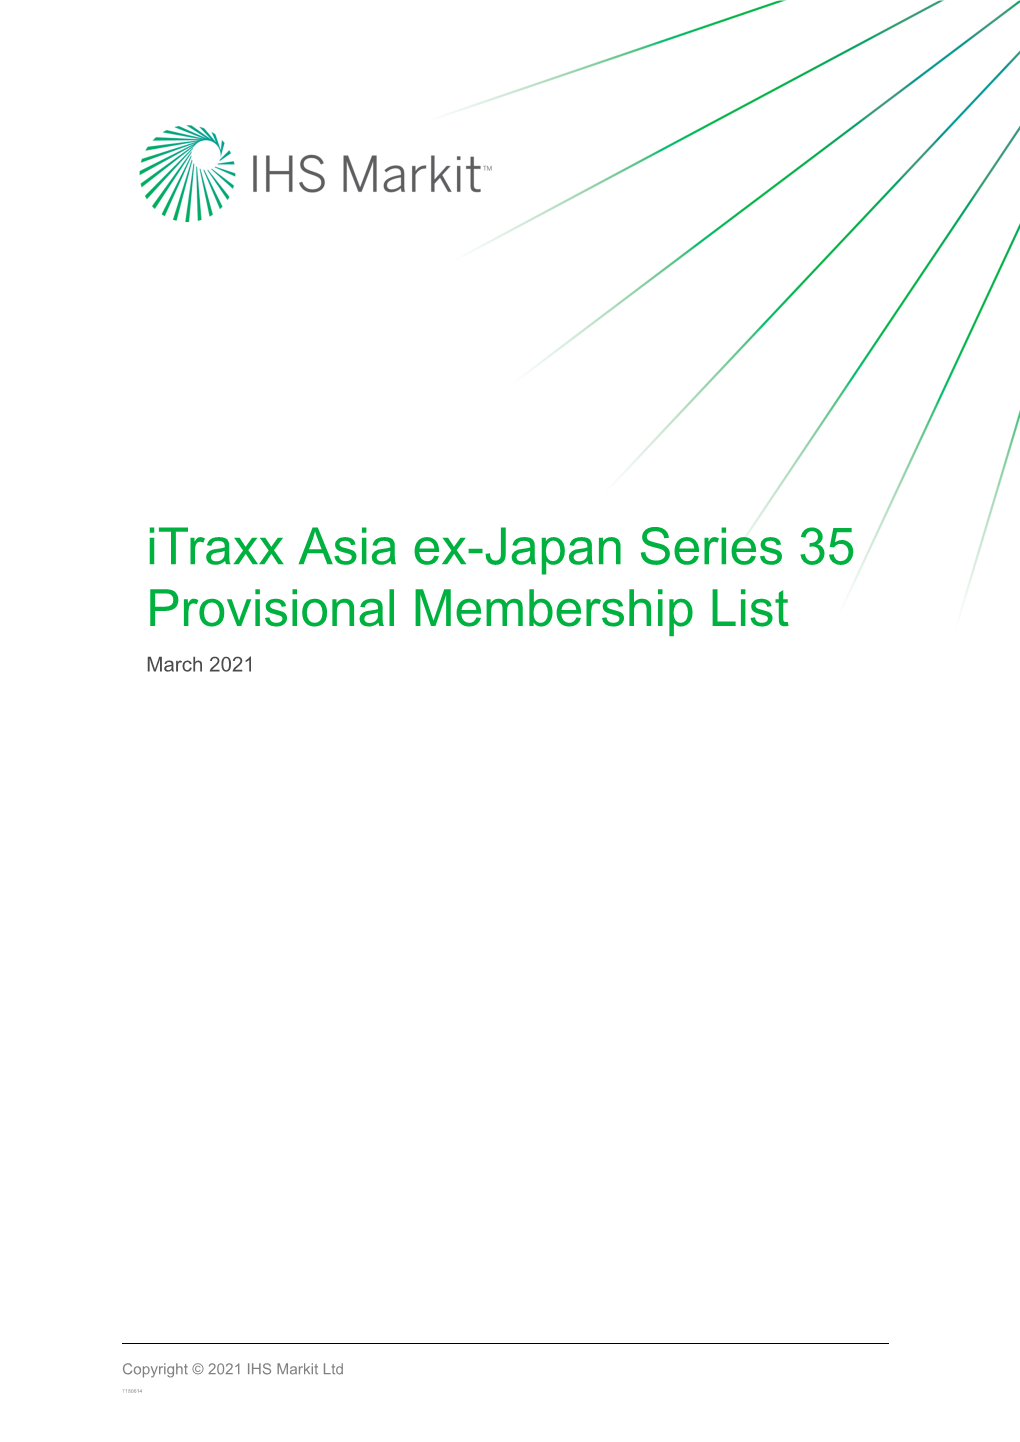 Itraxx Asia Ex-Japan Series 35 Provisional Membership List March 2021